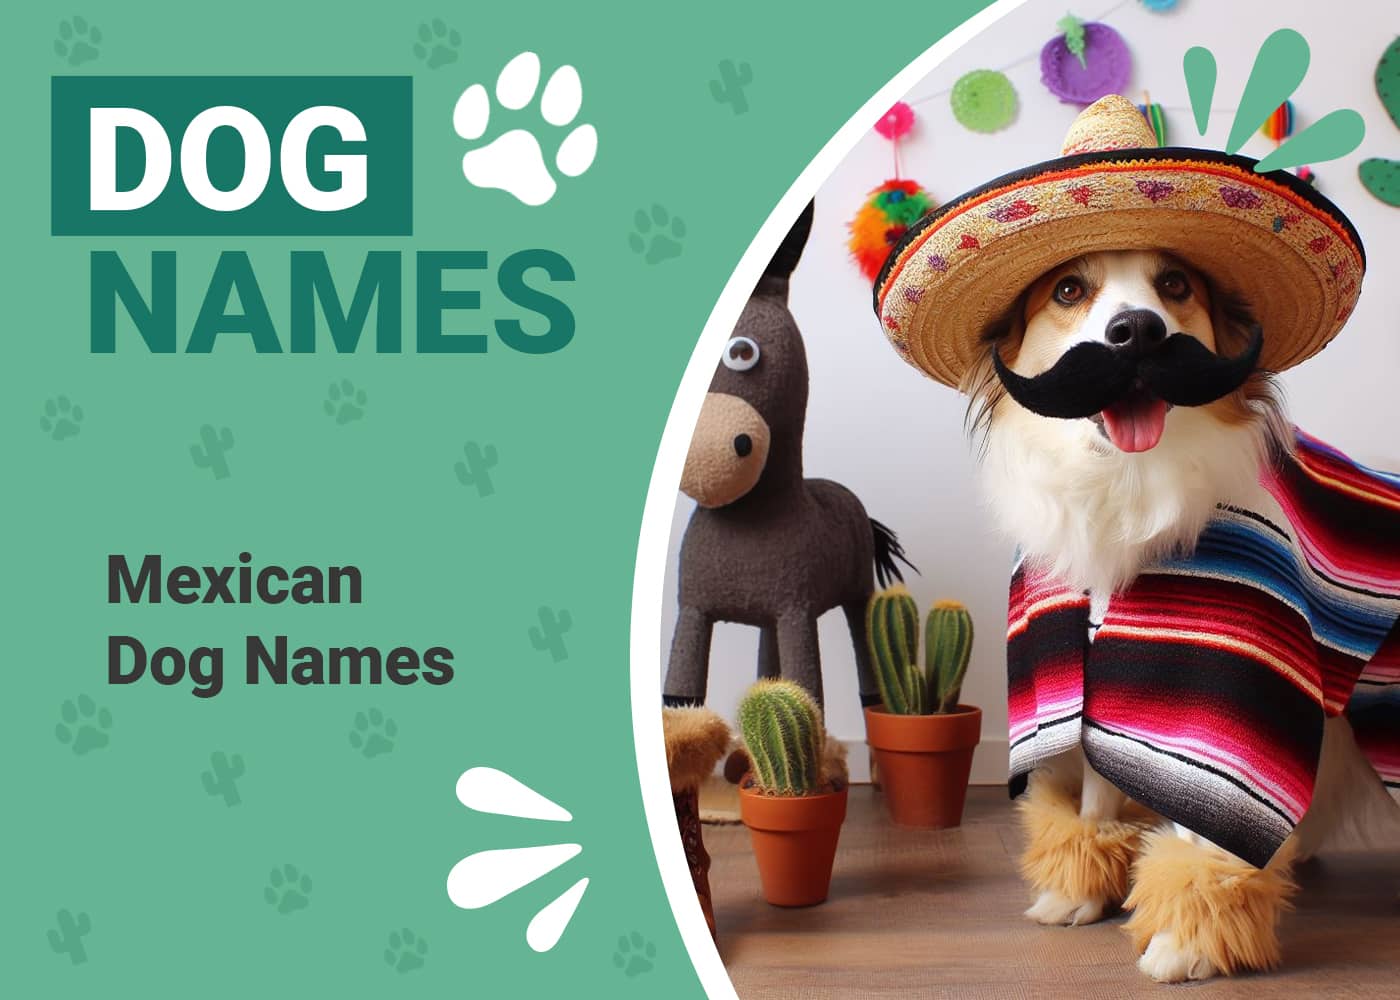 Mexican Dog Names